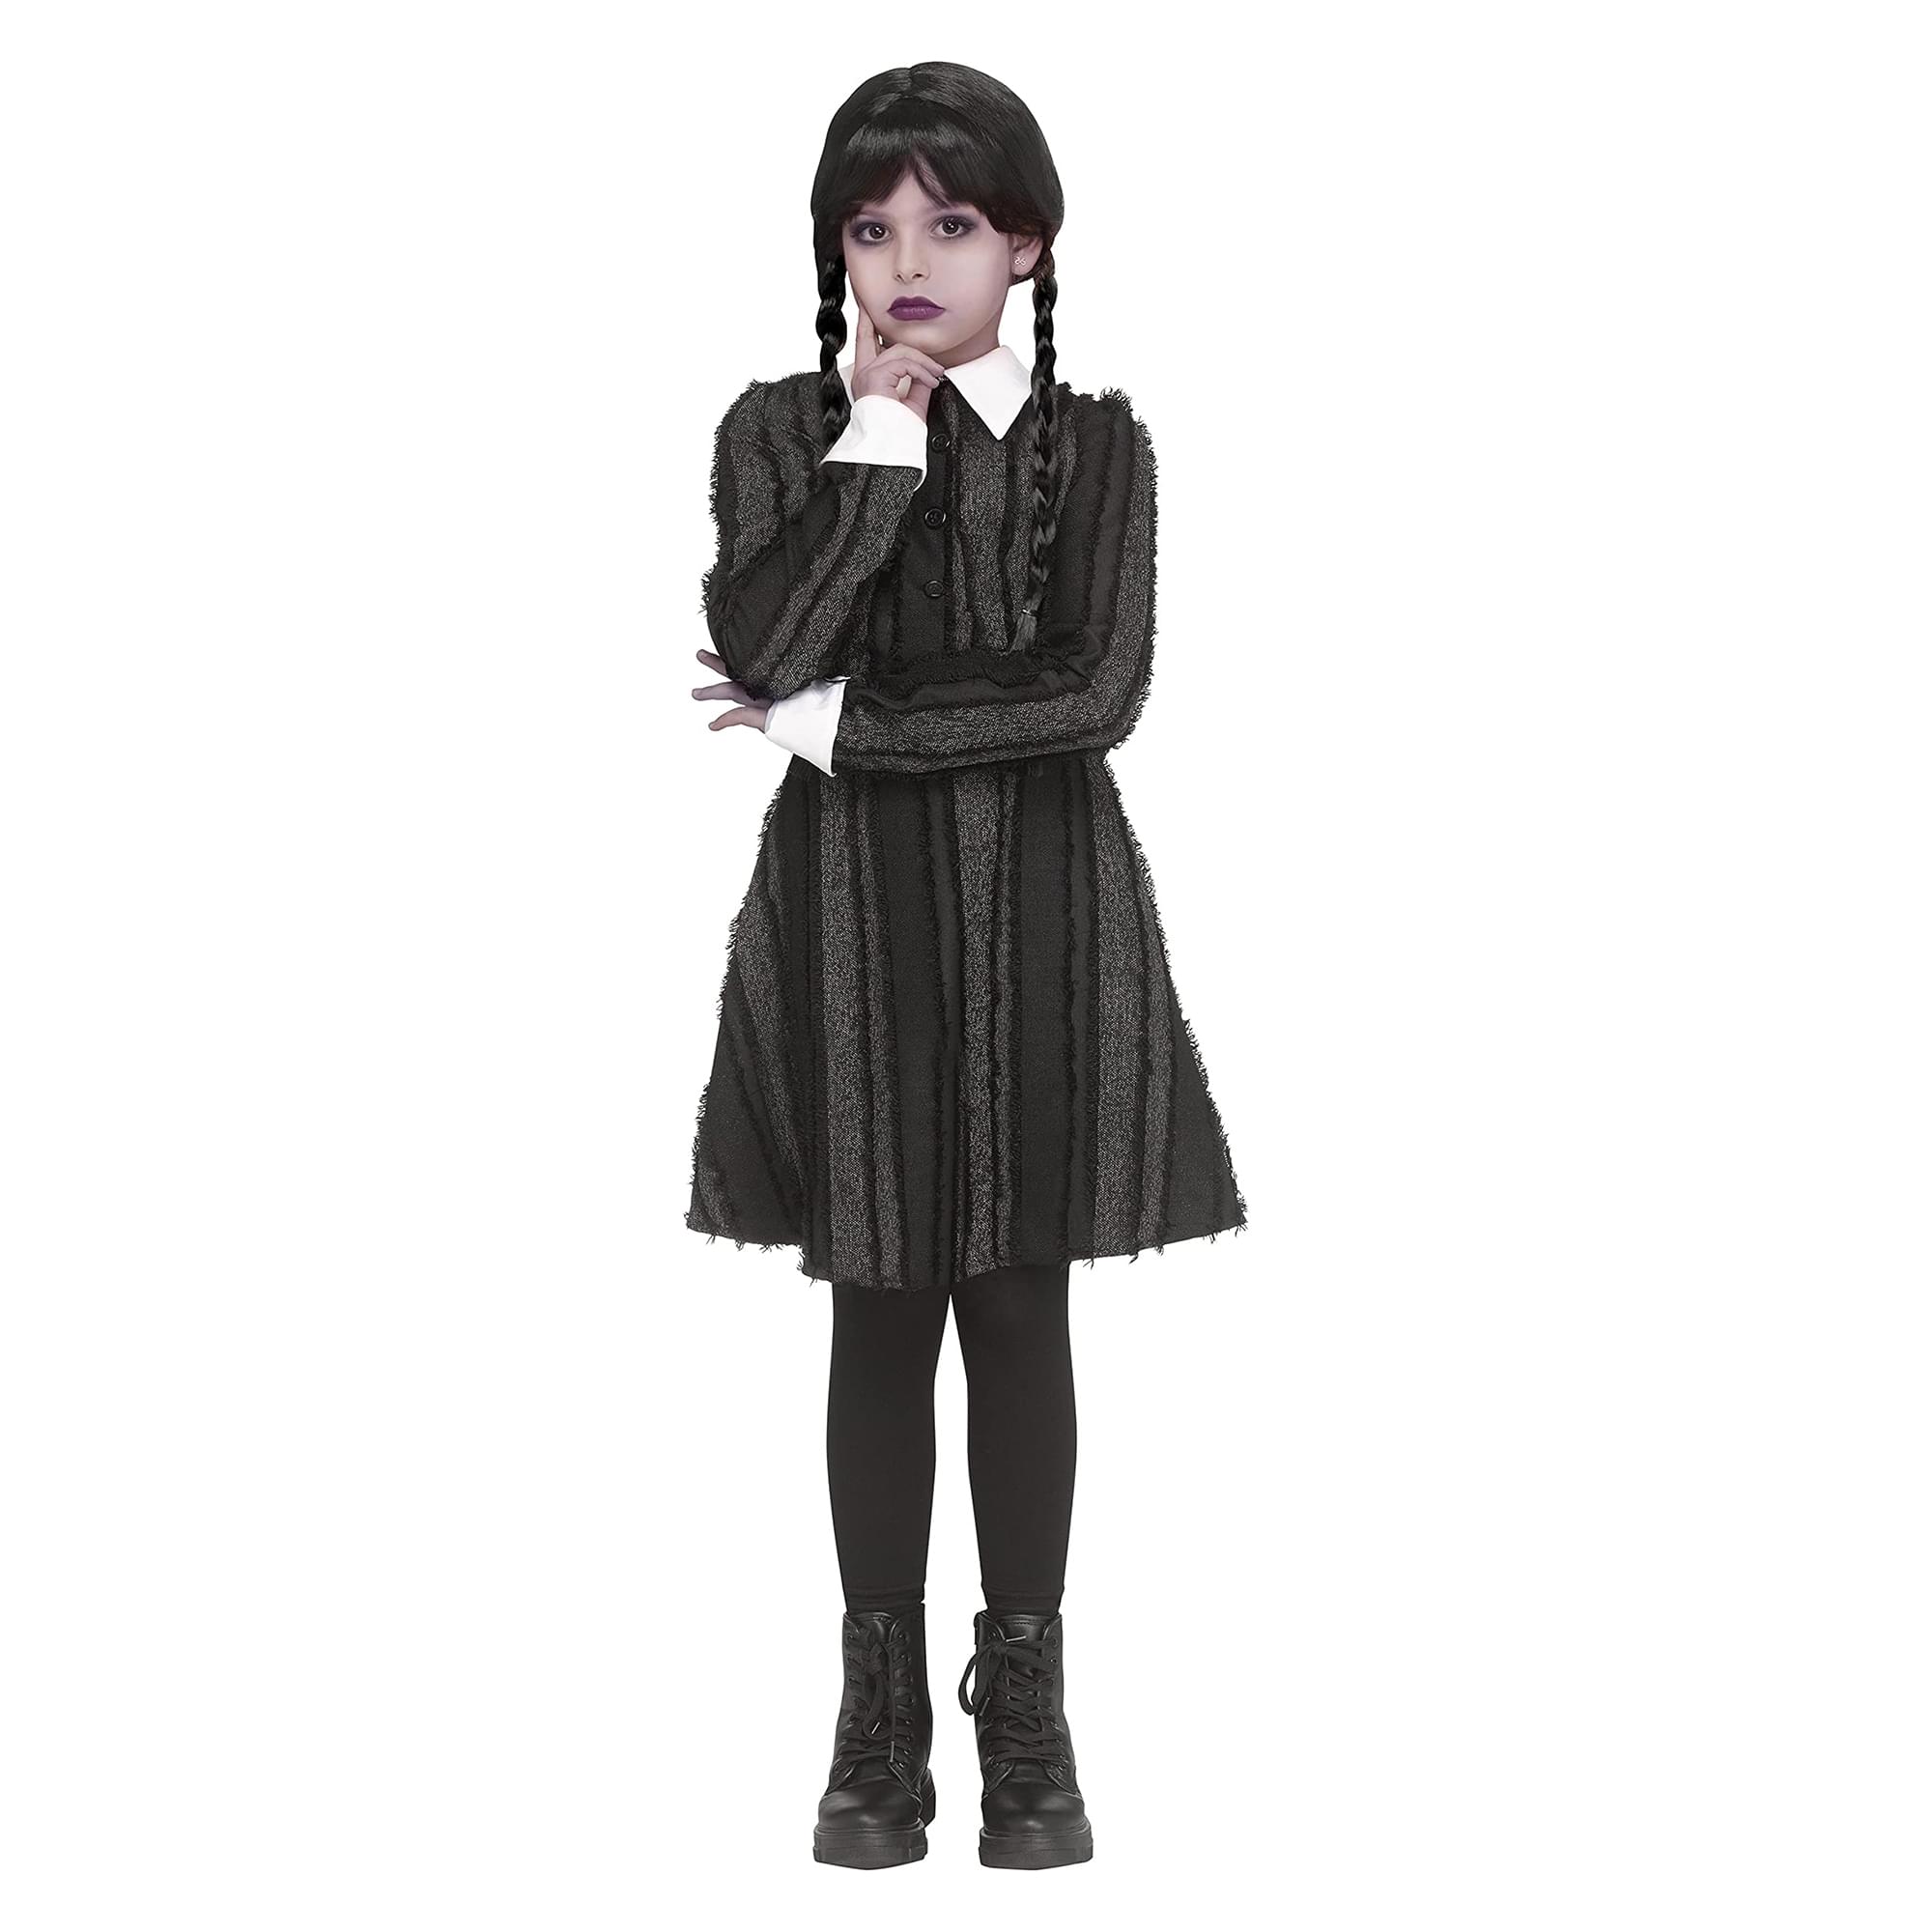 Photos - Fancy Dress Creepy Coed Child Costume FNW-127502L-C